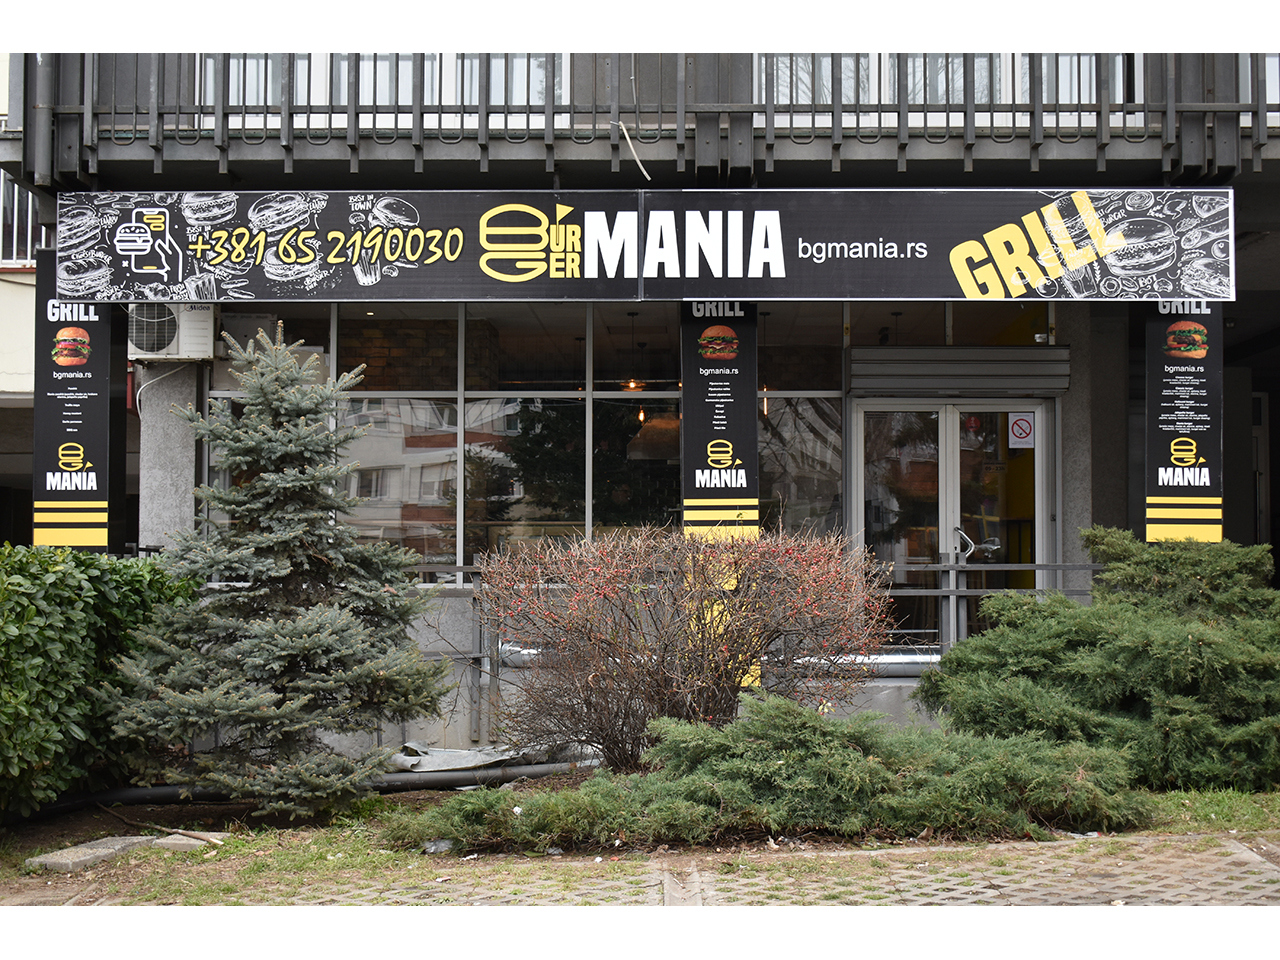 BG MANIA BURGER & GRILL Grill Belgrade - Photo 1